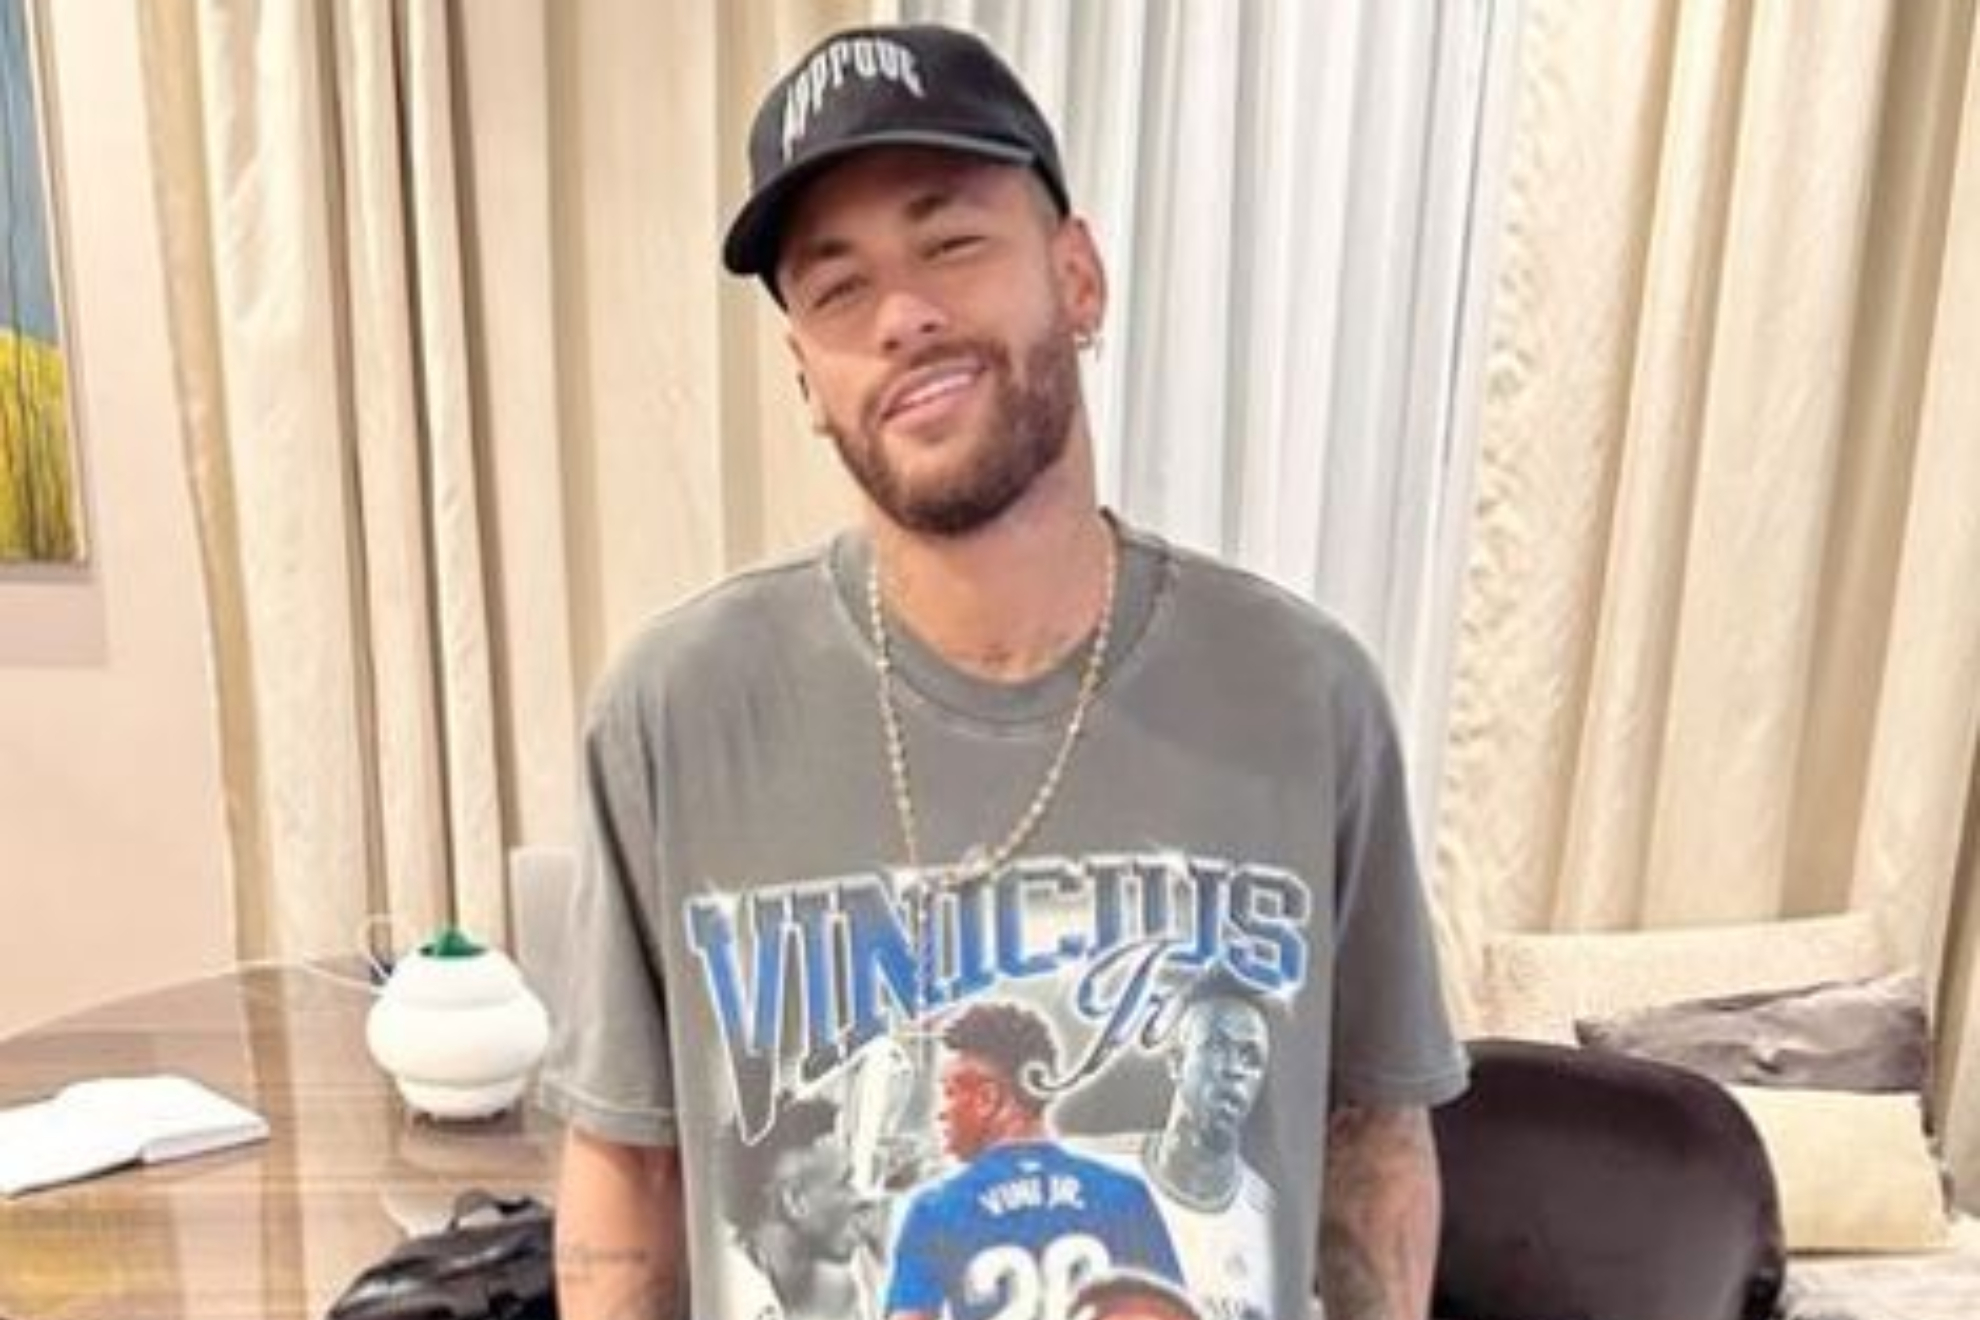 Neymar in his Vinicius shirt.